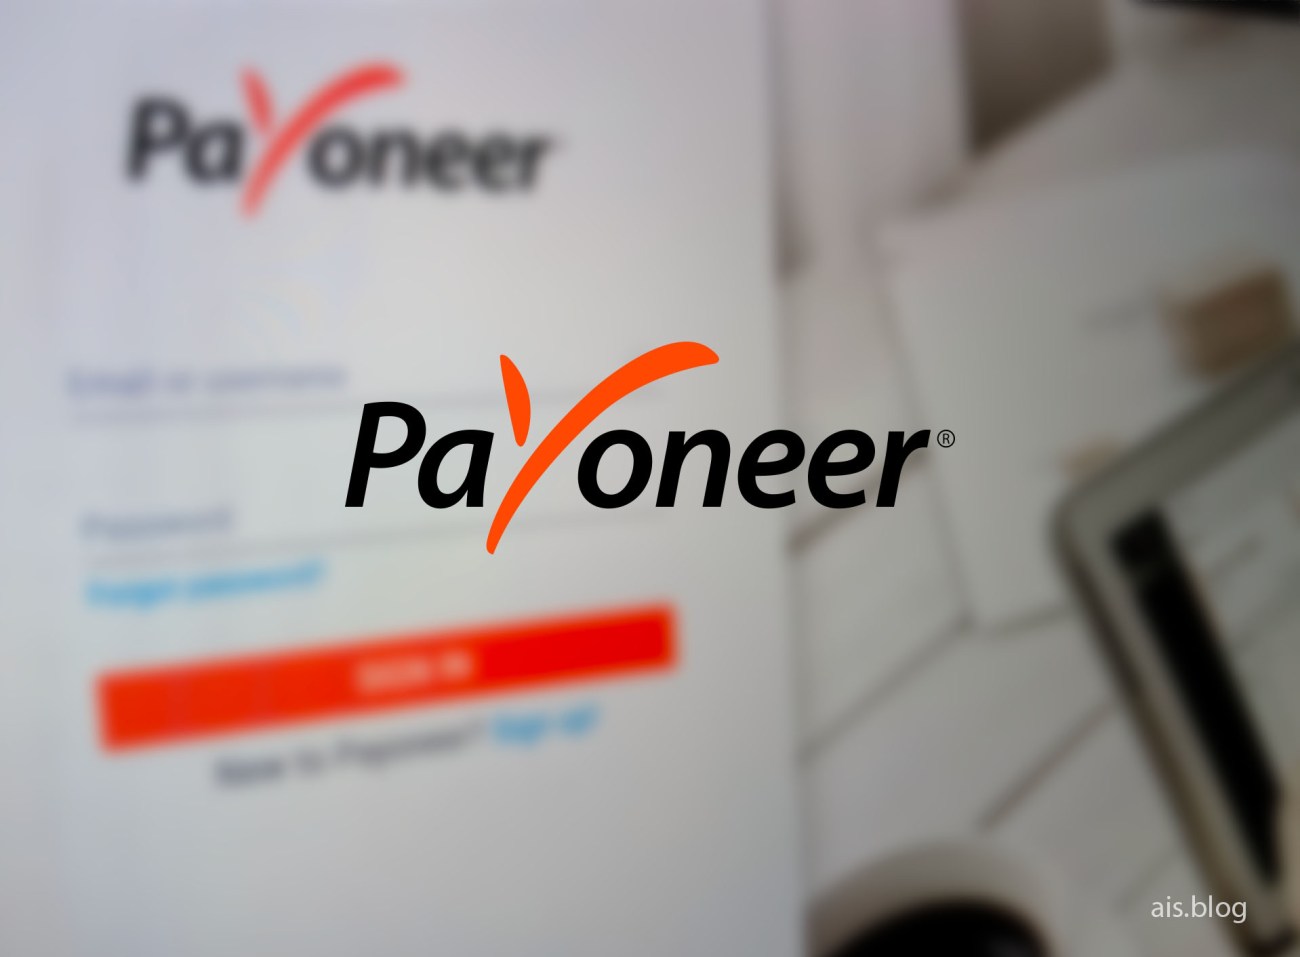 Can I pay with Payoneer master card or Payoneer Virtual card? - Google Ads Community